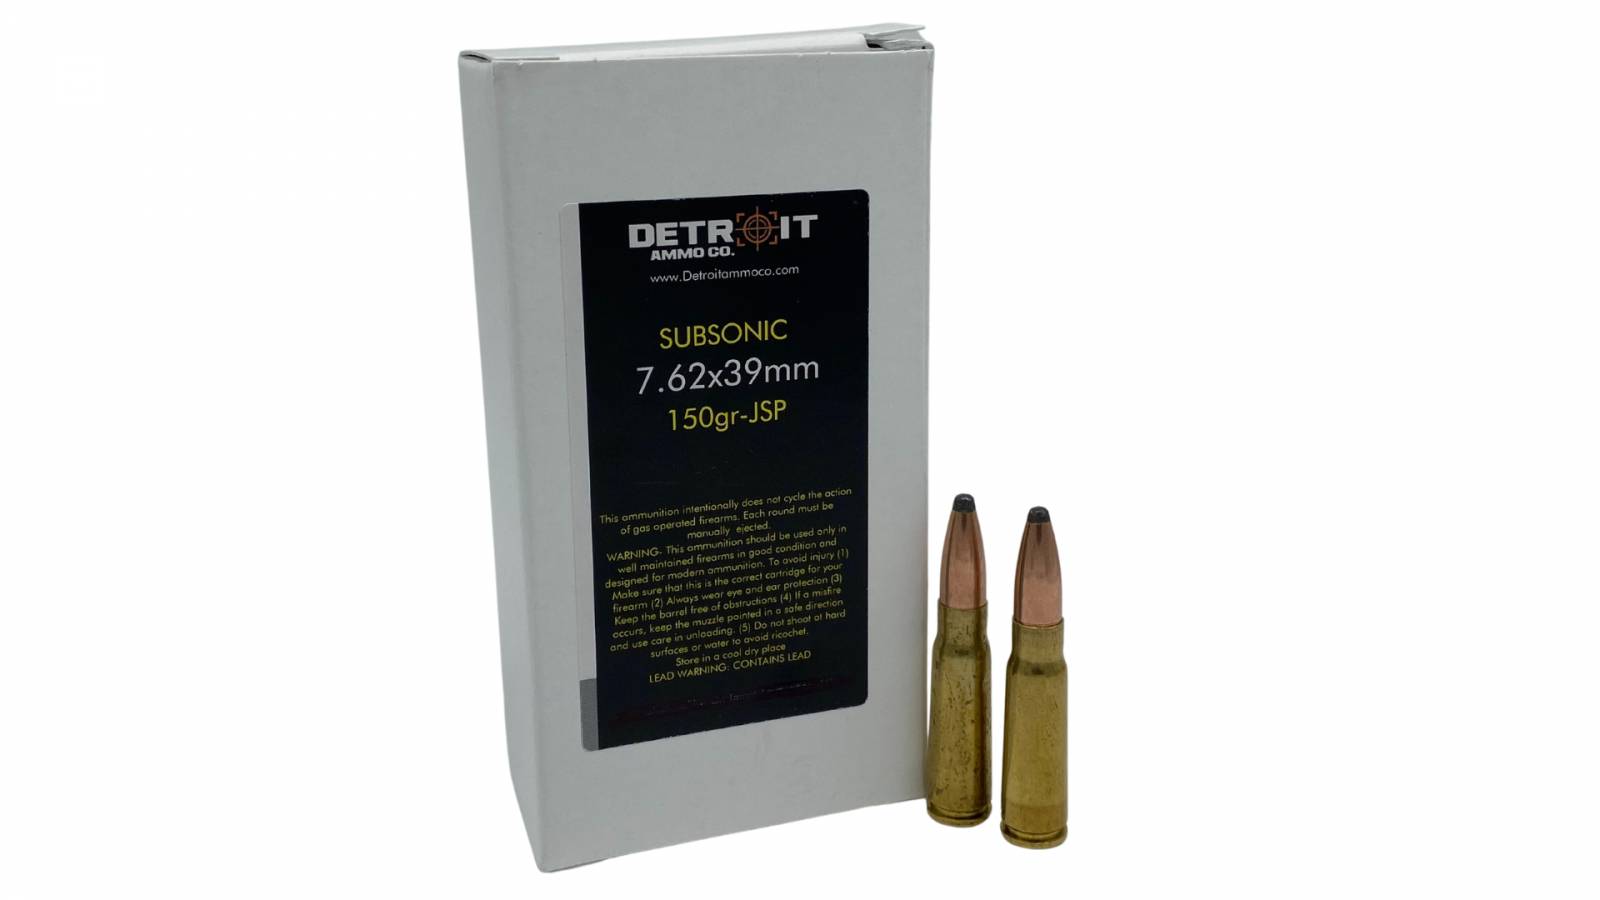 SUBSONIC 7.62x39mm 150gr JSP - Detroit Ammo Co.